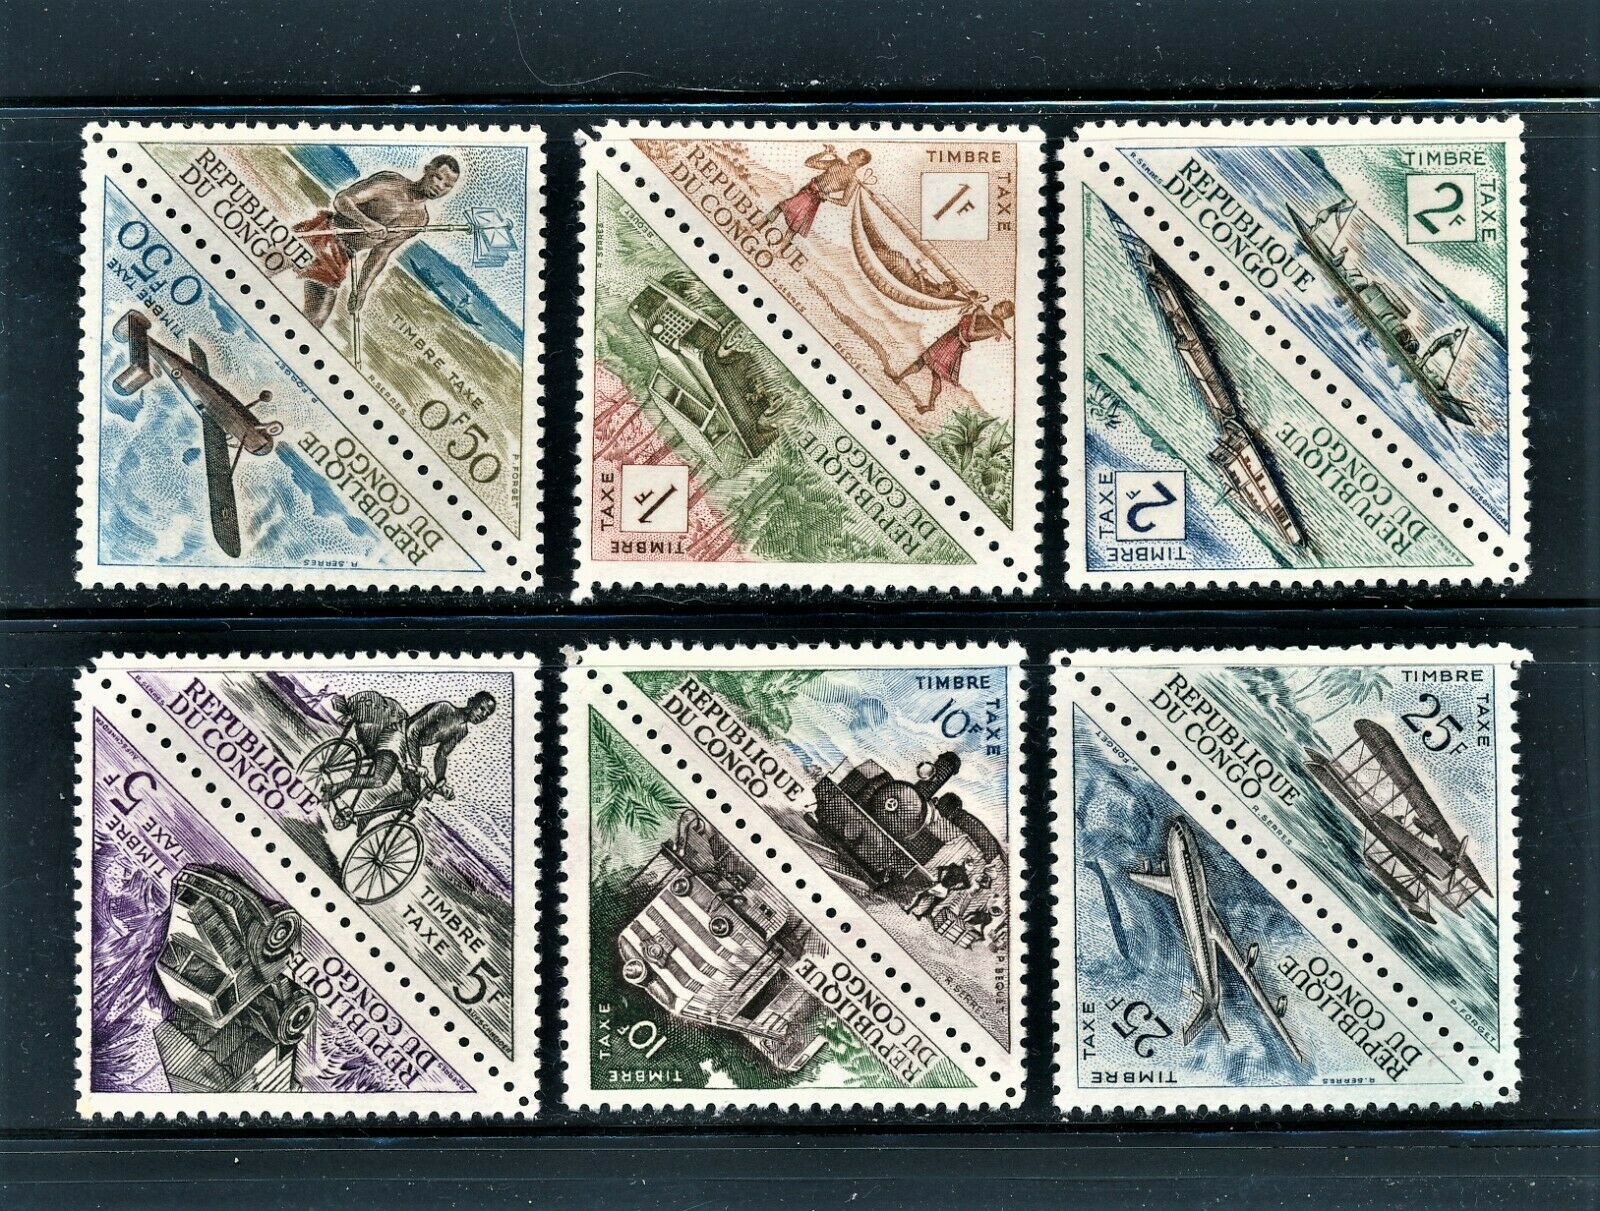 Congo Republic 1961 Postage Due Set 12 Stamps, 6 Tete Beche Pairs Sct J34a-j39a